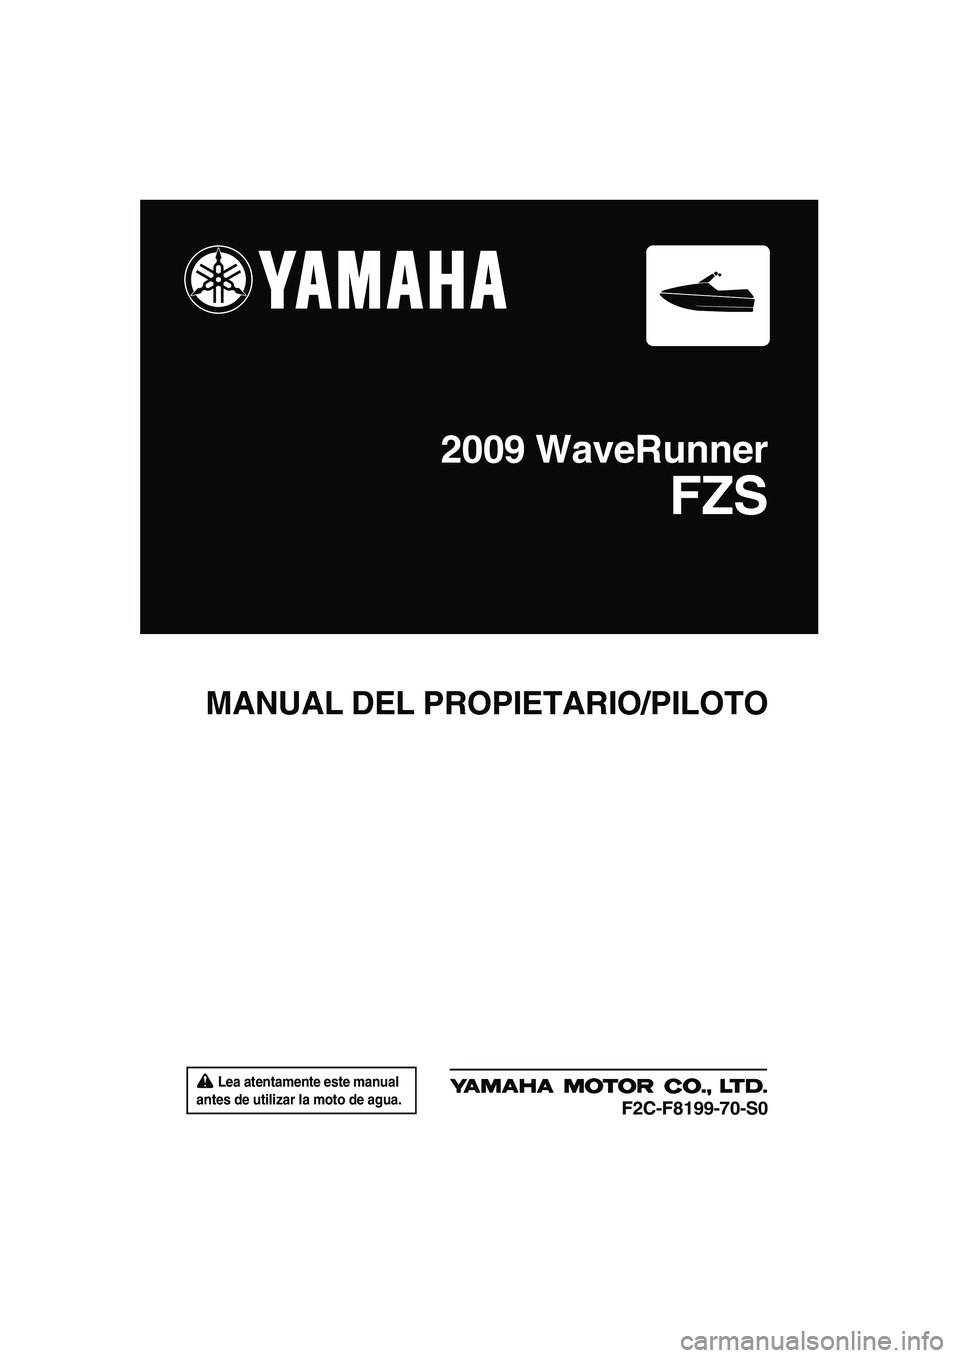 YAMAHA FZS 2009  Manuale de Empleo (in Spanish)  Lea atentamente este manual 
antes de utilizar la moto de agua.
MANUAL DEL PROPIETARIO/PILOTO
2009 WaveRunner
FZS
F2C-F8199-70-S0
UF2C70S0.book  Page 1  Tuesday, November 4, 2008  4:30 PM 